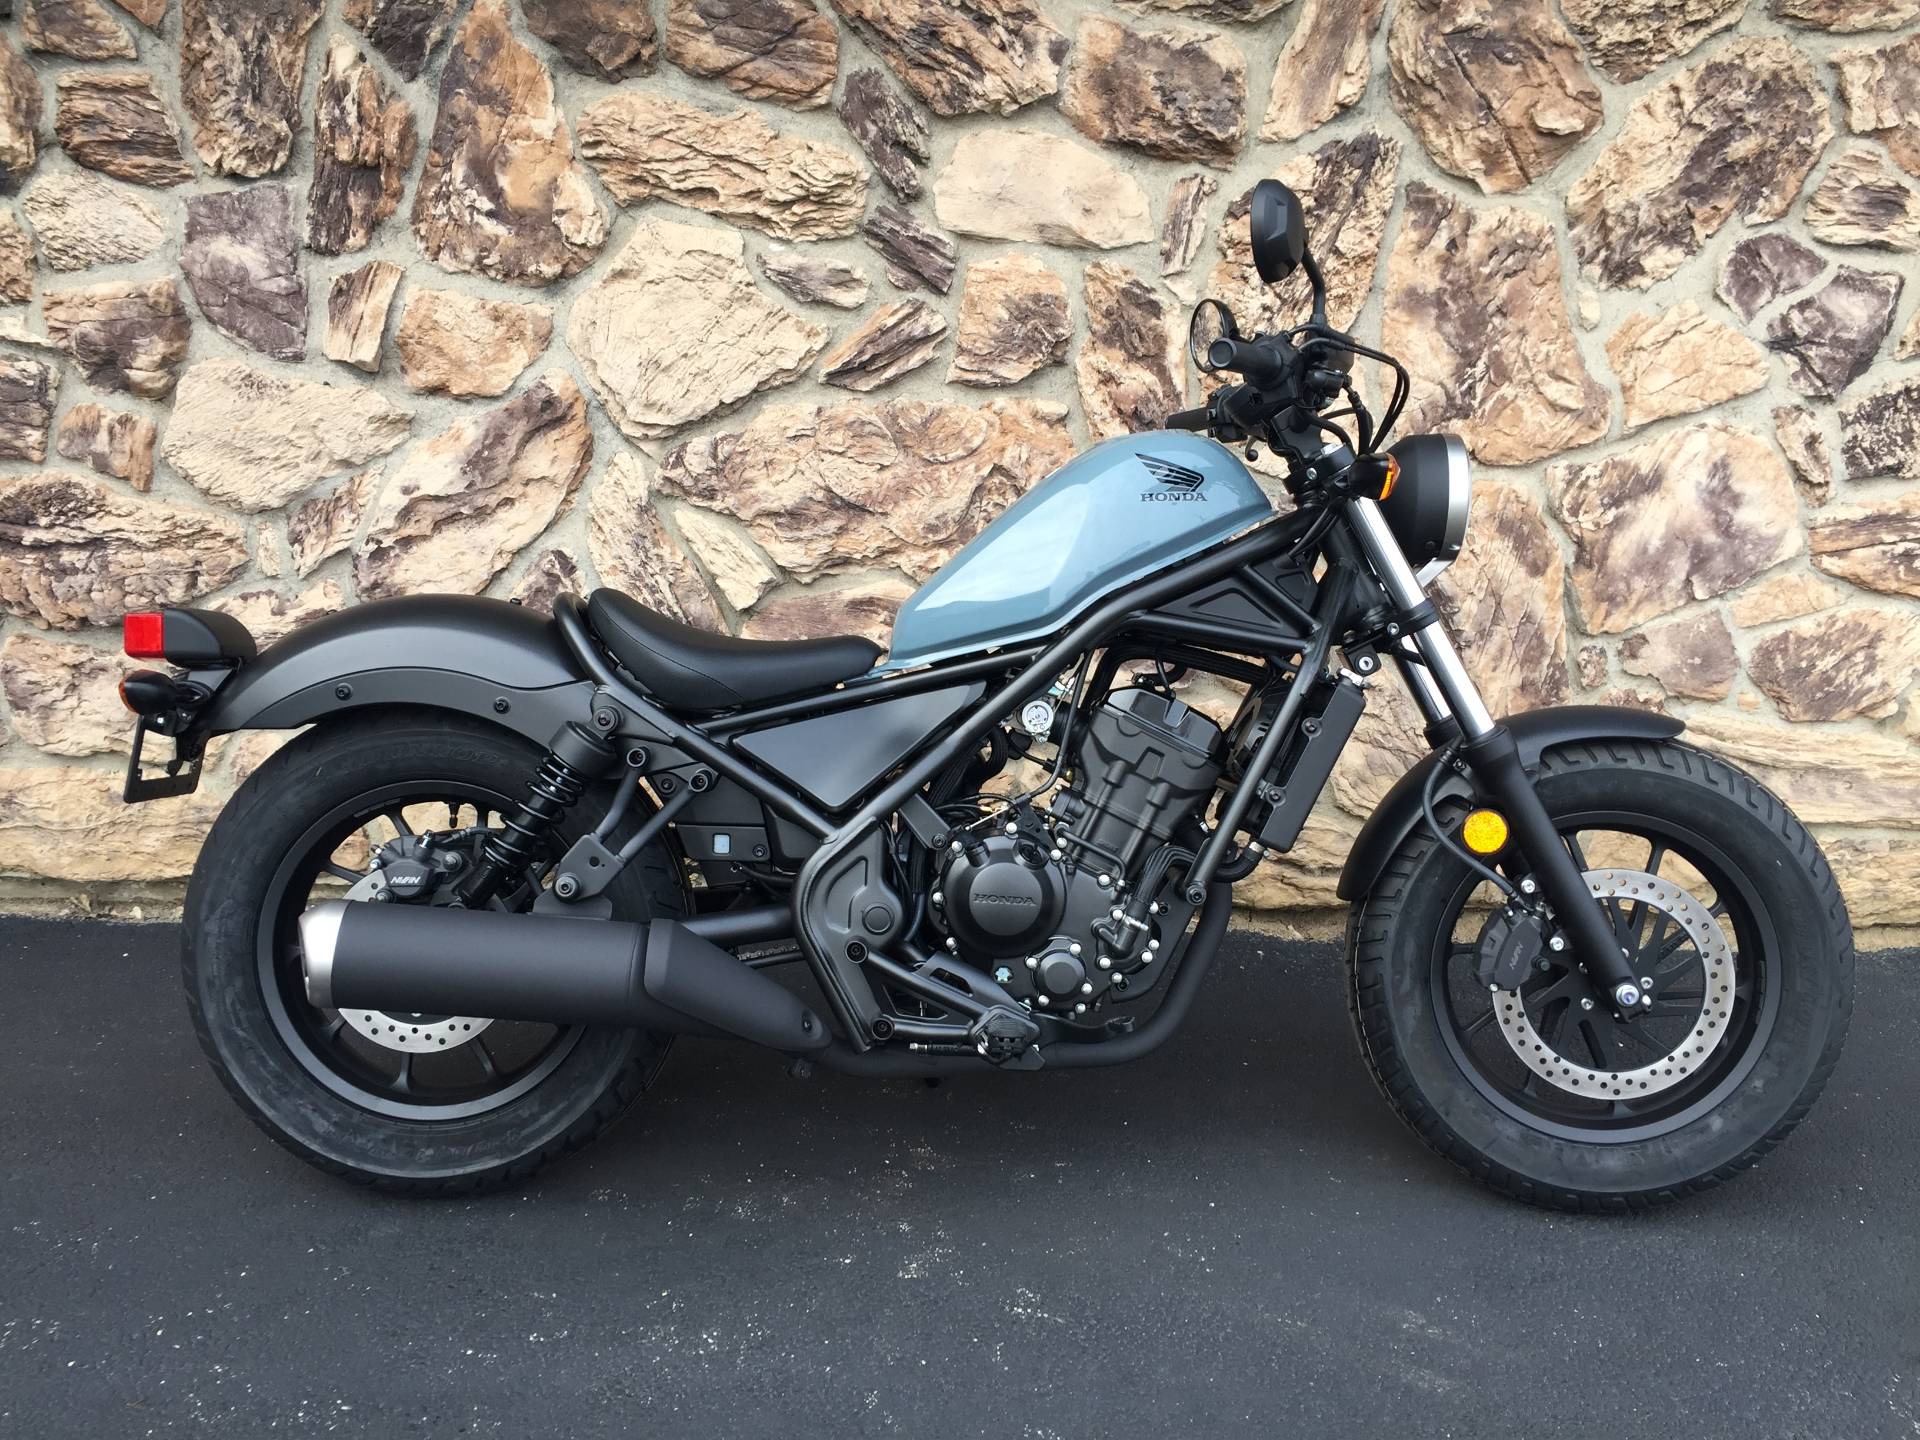 New 2019 Honda Rebel 300 Motorcycles in Aurora IL Stock 